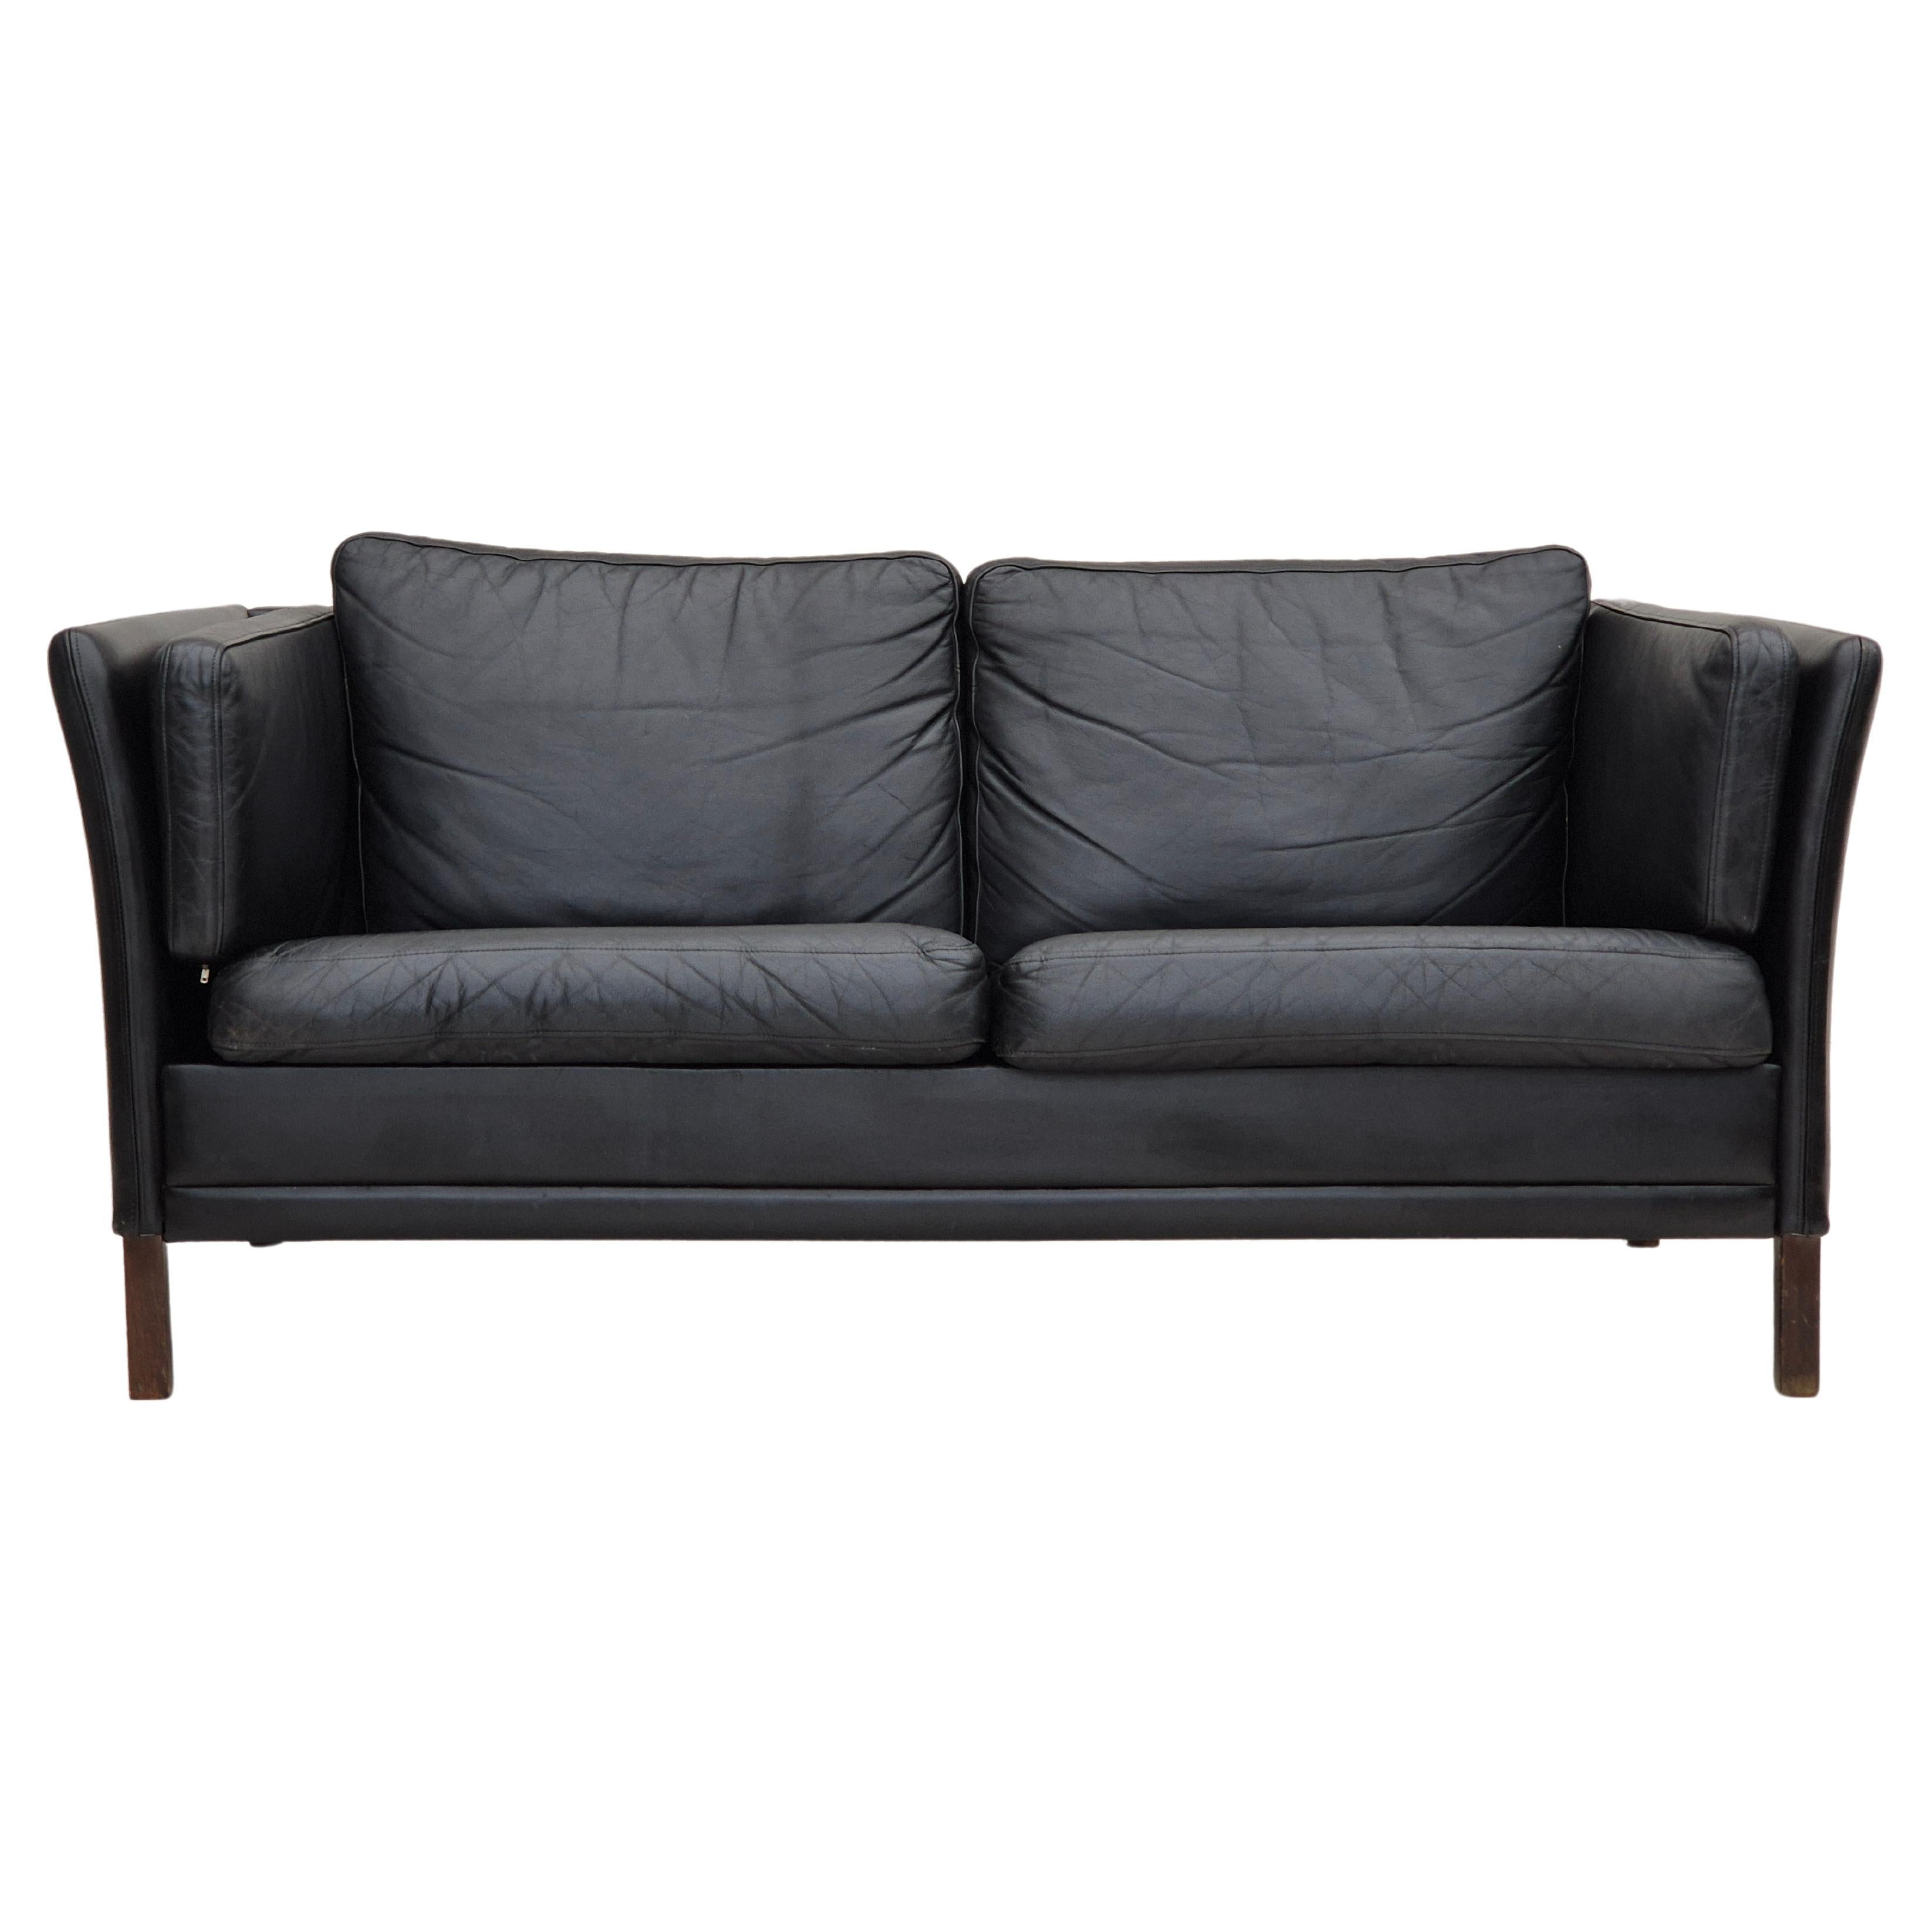 1960s, Danish design by Mogens Hansen, 2 seater sofa in original condition. For Sale